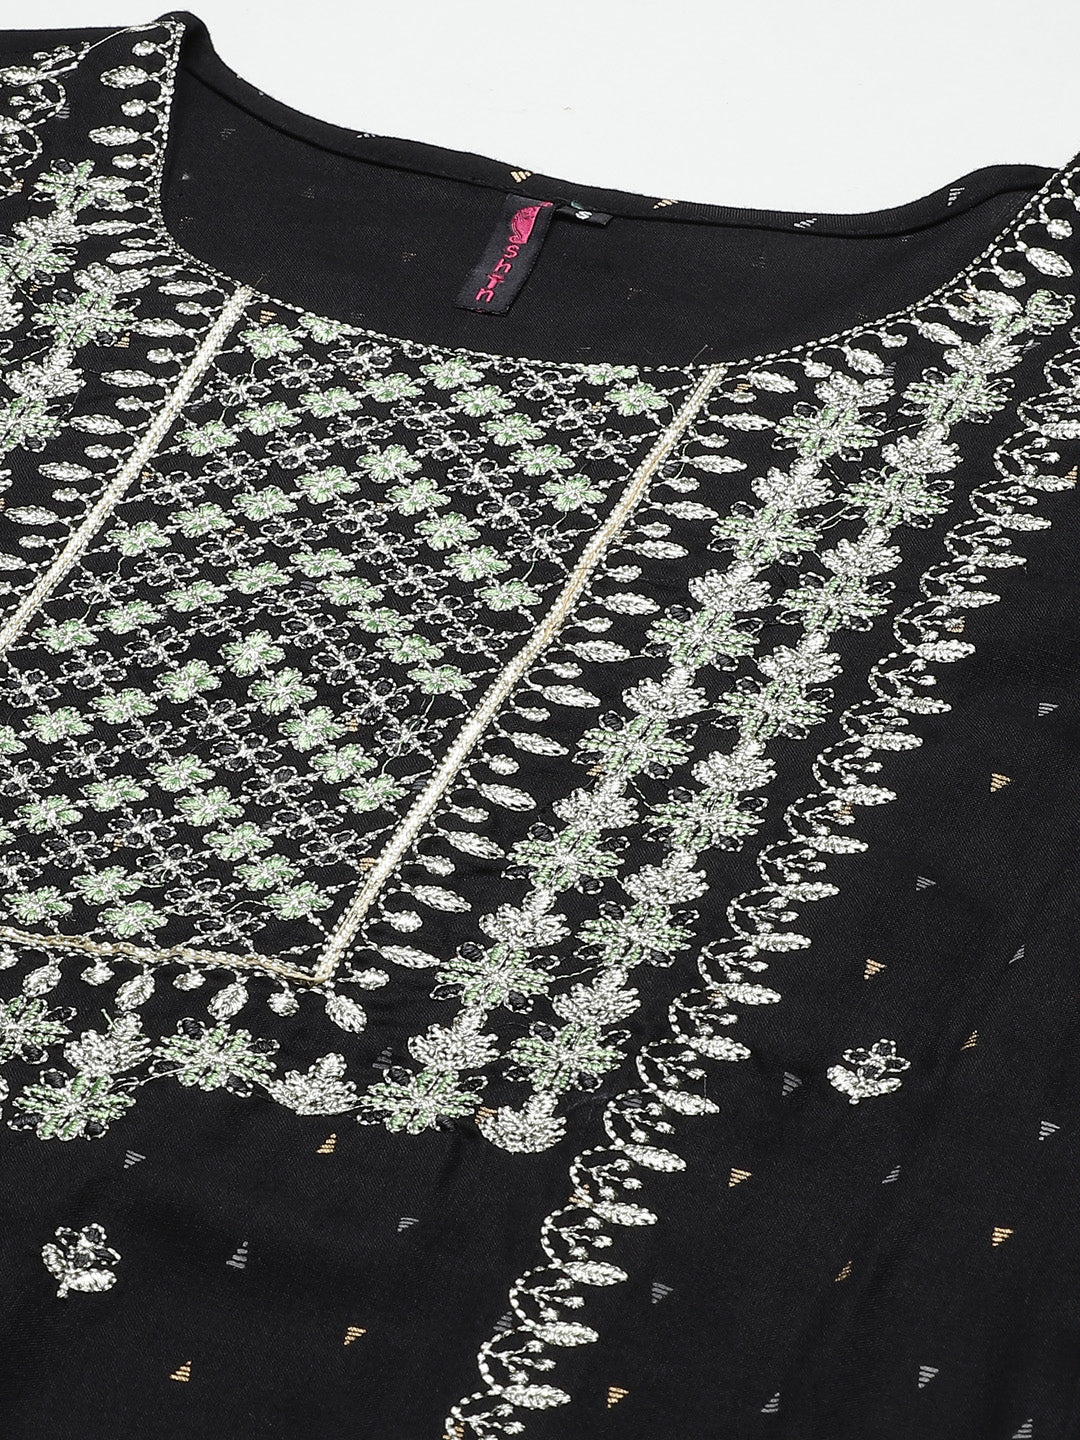 Ishin Women's Rayon Black Embroidered A-Line Kurta Sharara Dupatta Set